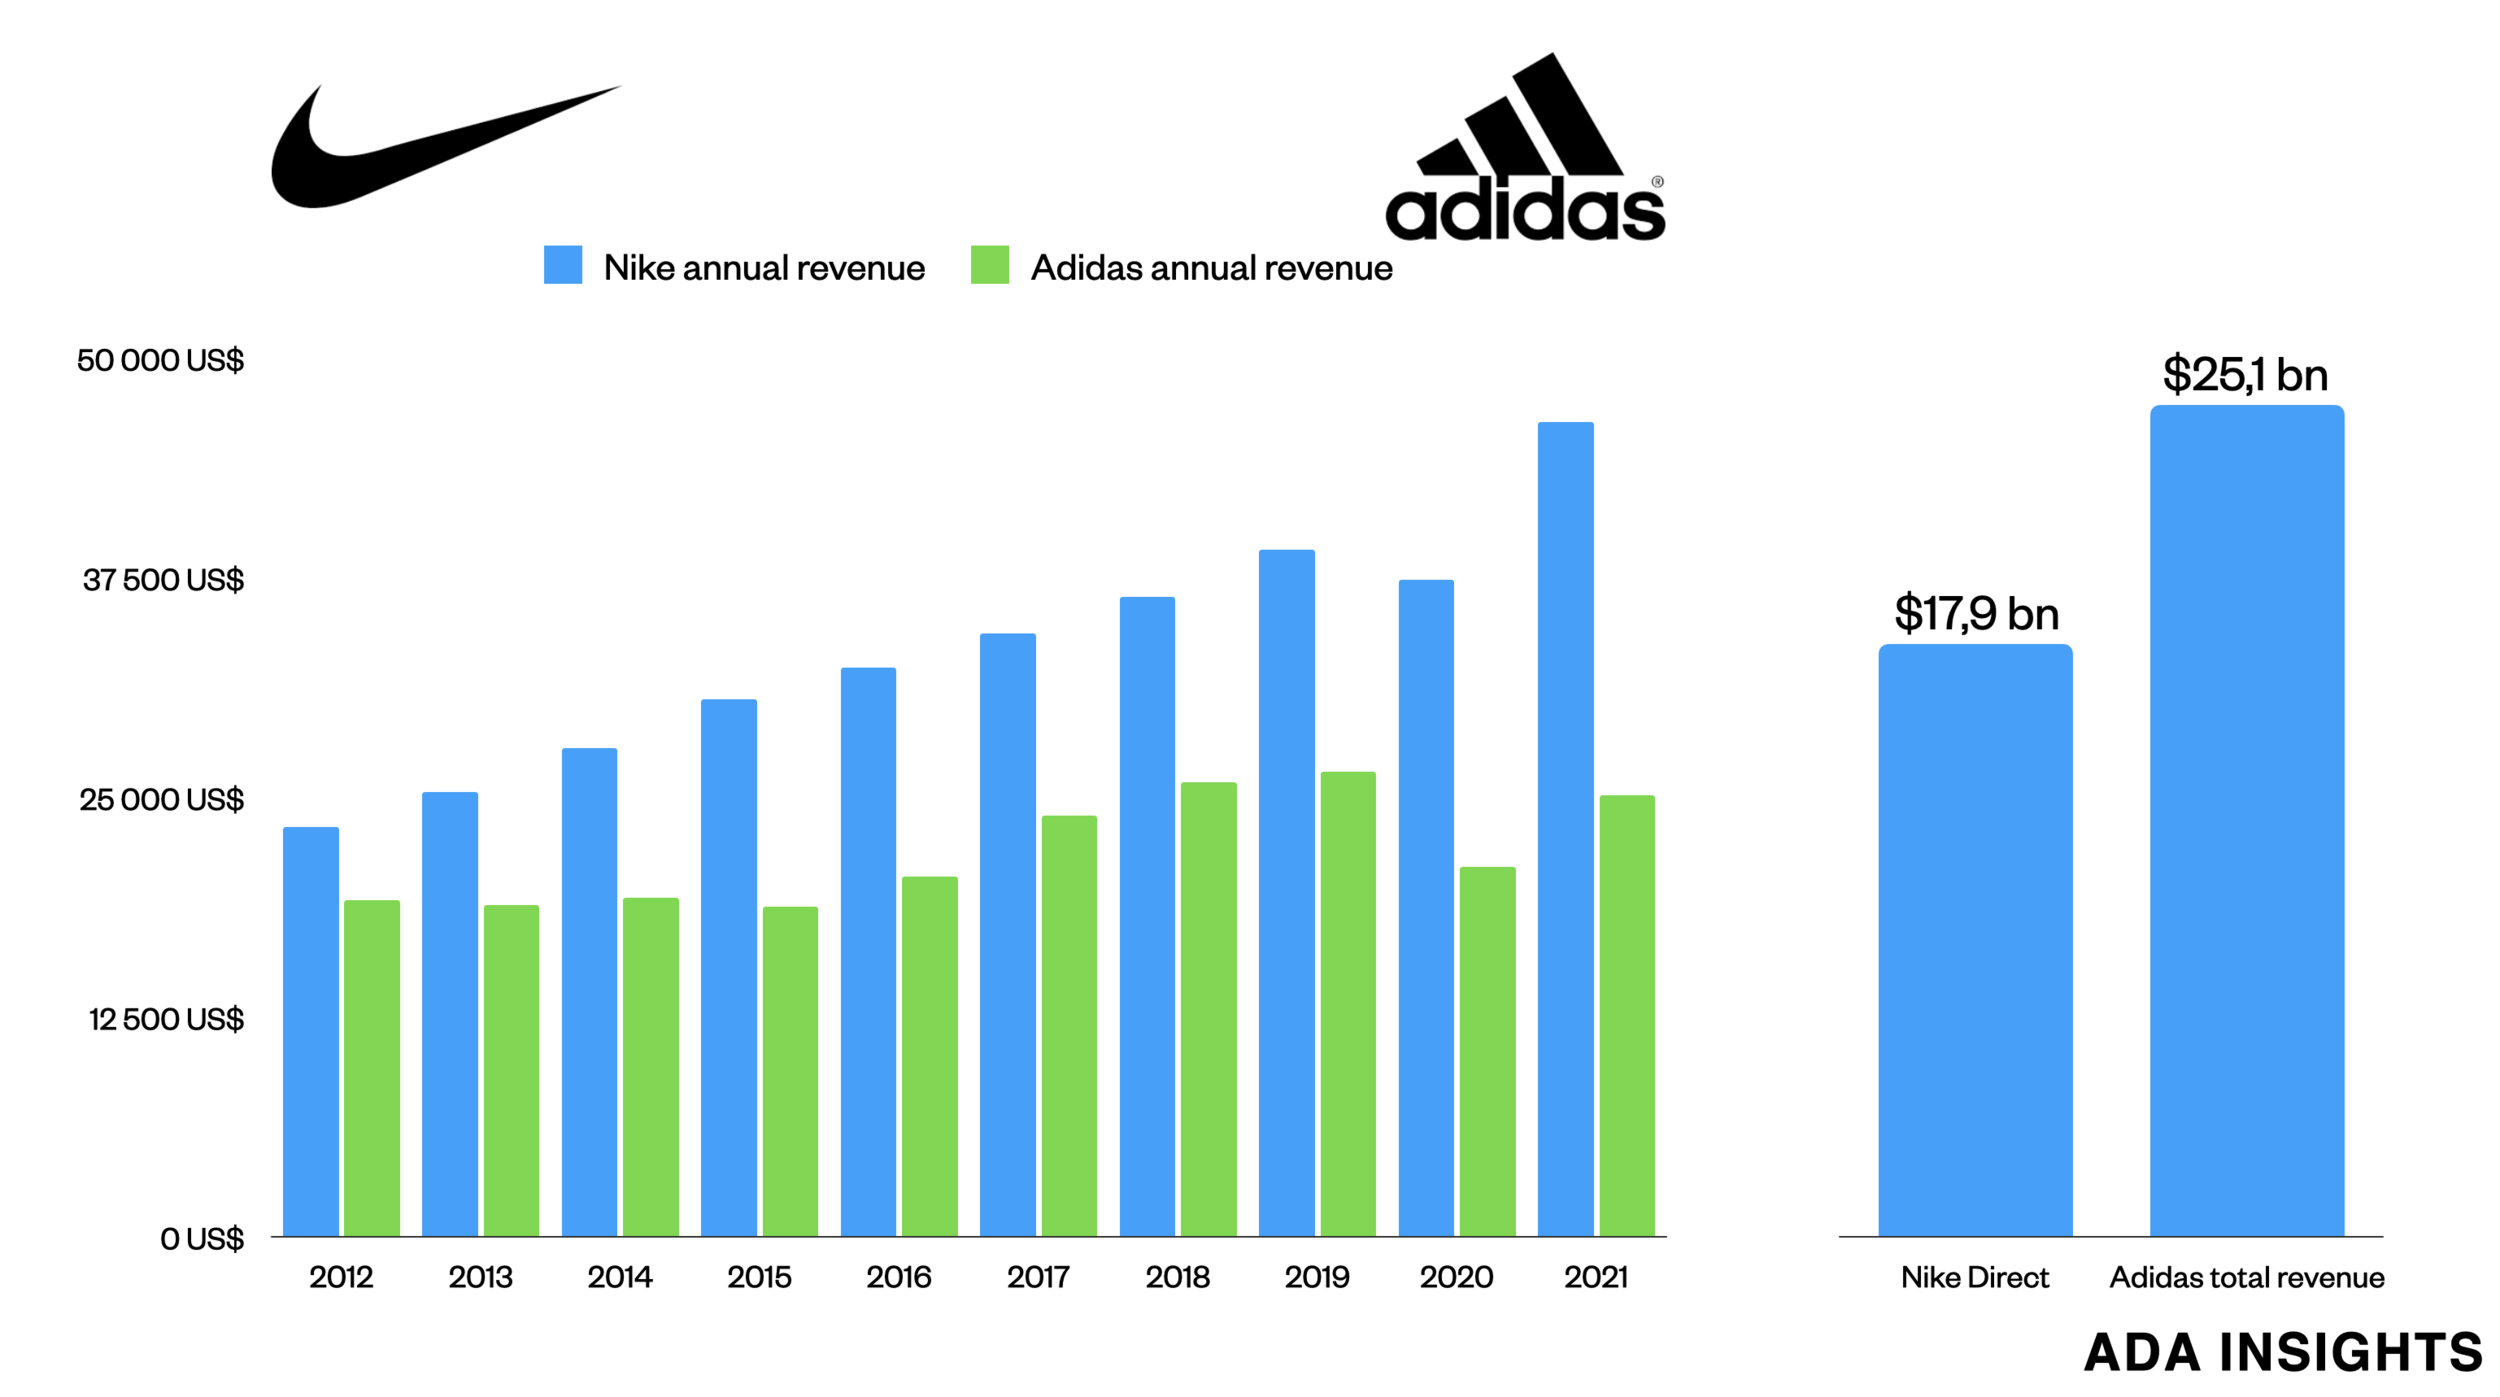 kop Aap karakter Nike Direct already 70% of Adidas revenue — Ada Insights